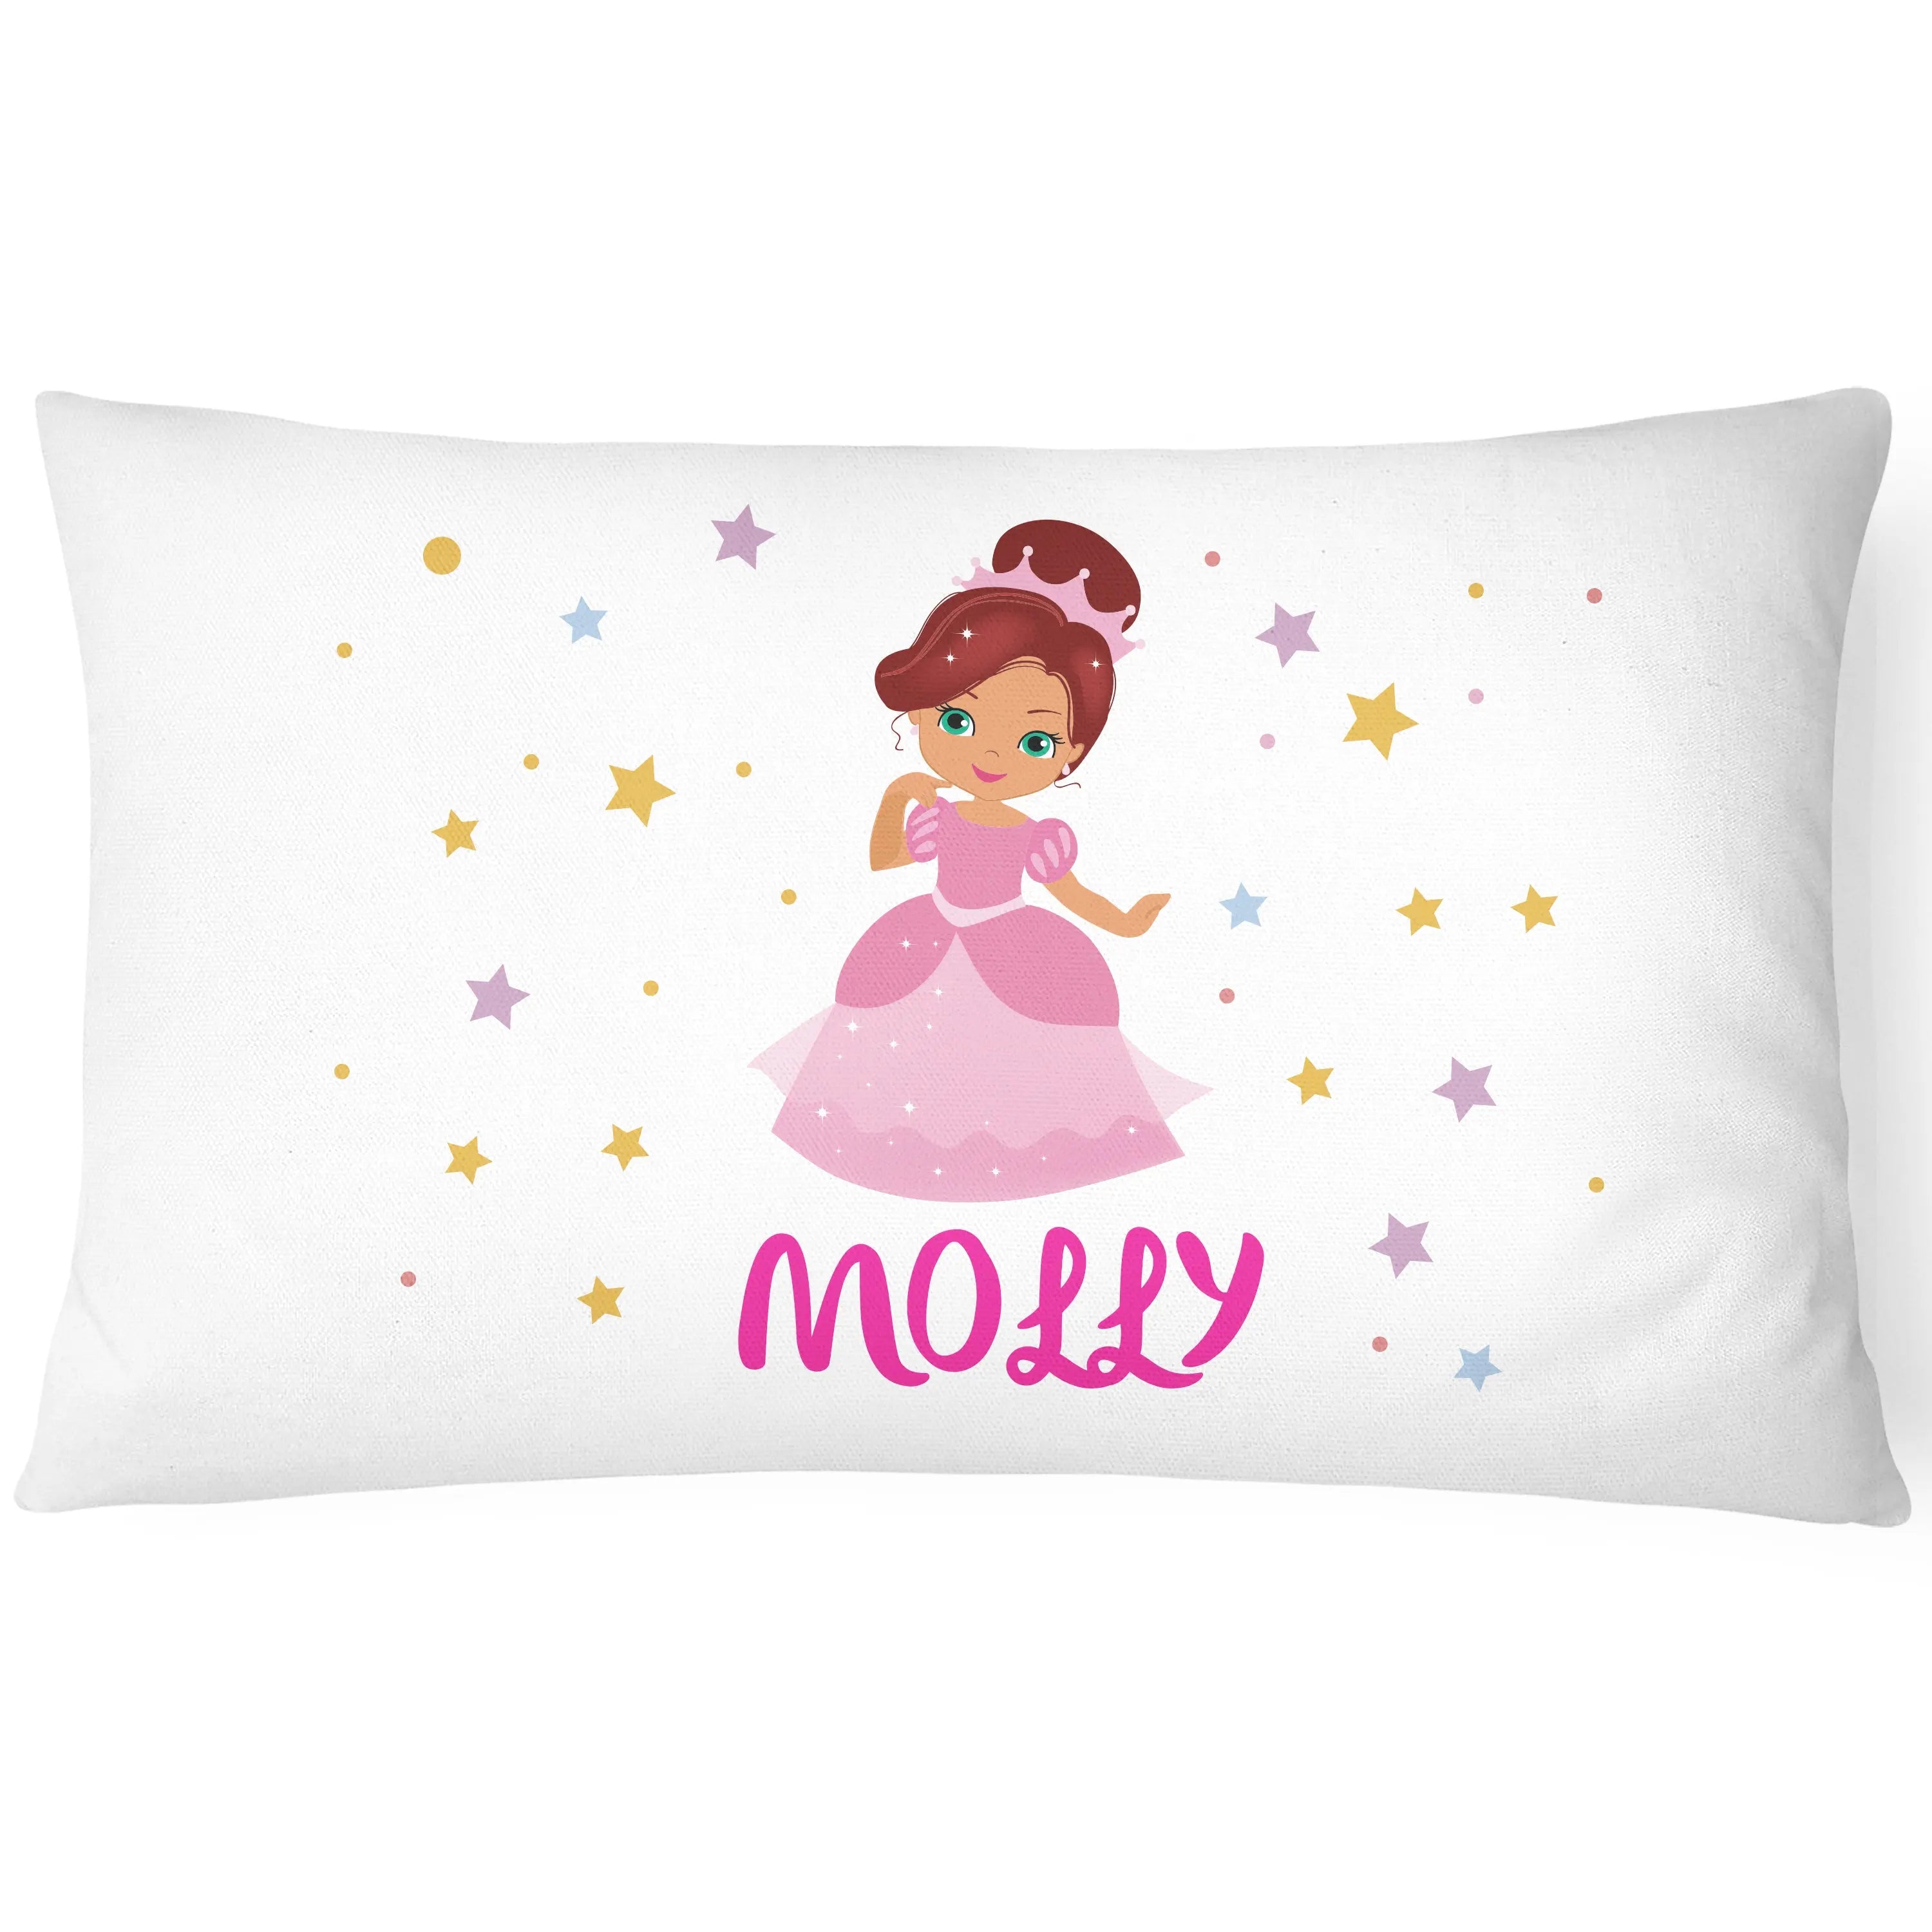 Personalised Princess Pillowcase - Pink & Stars